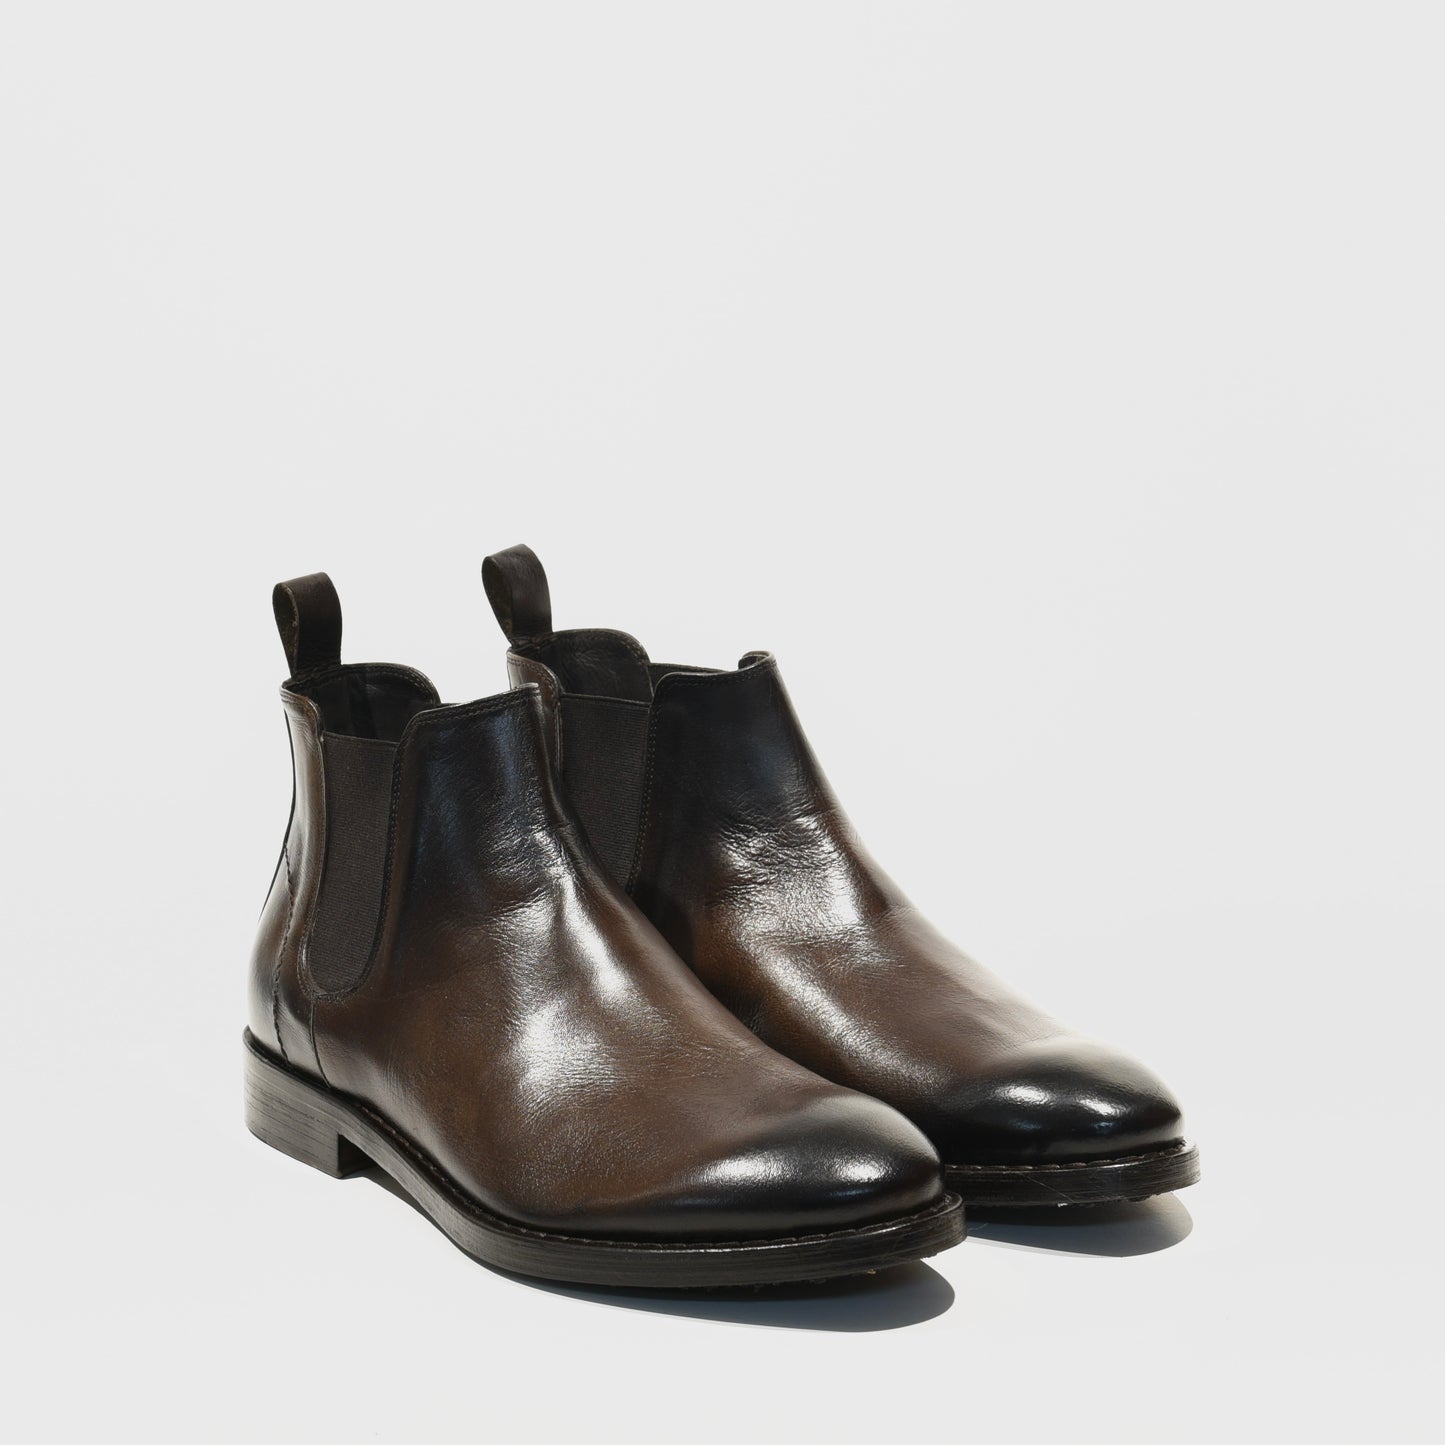 Shalapi Italian Chelsea boots for men in brown